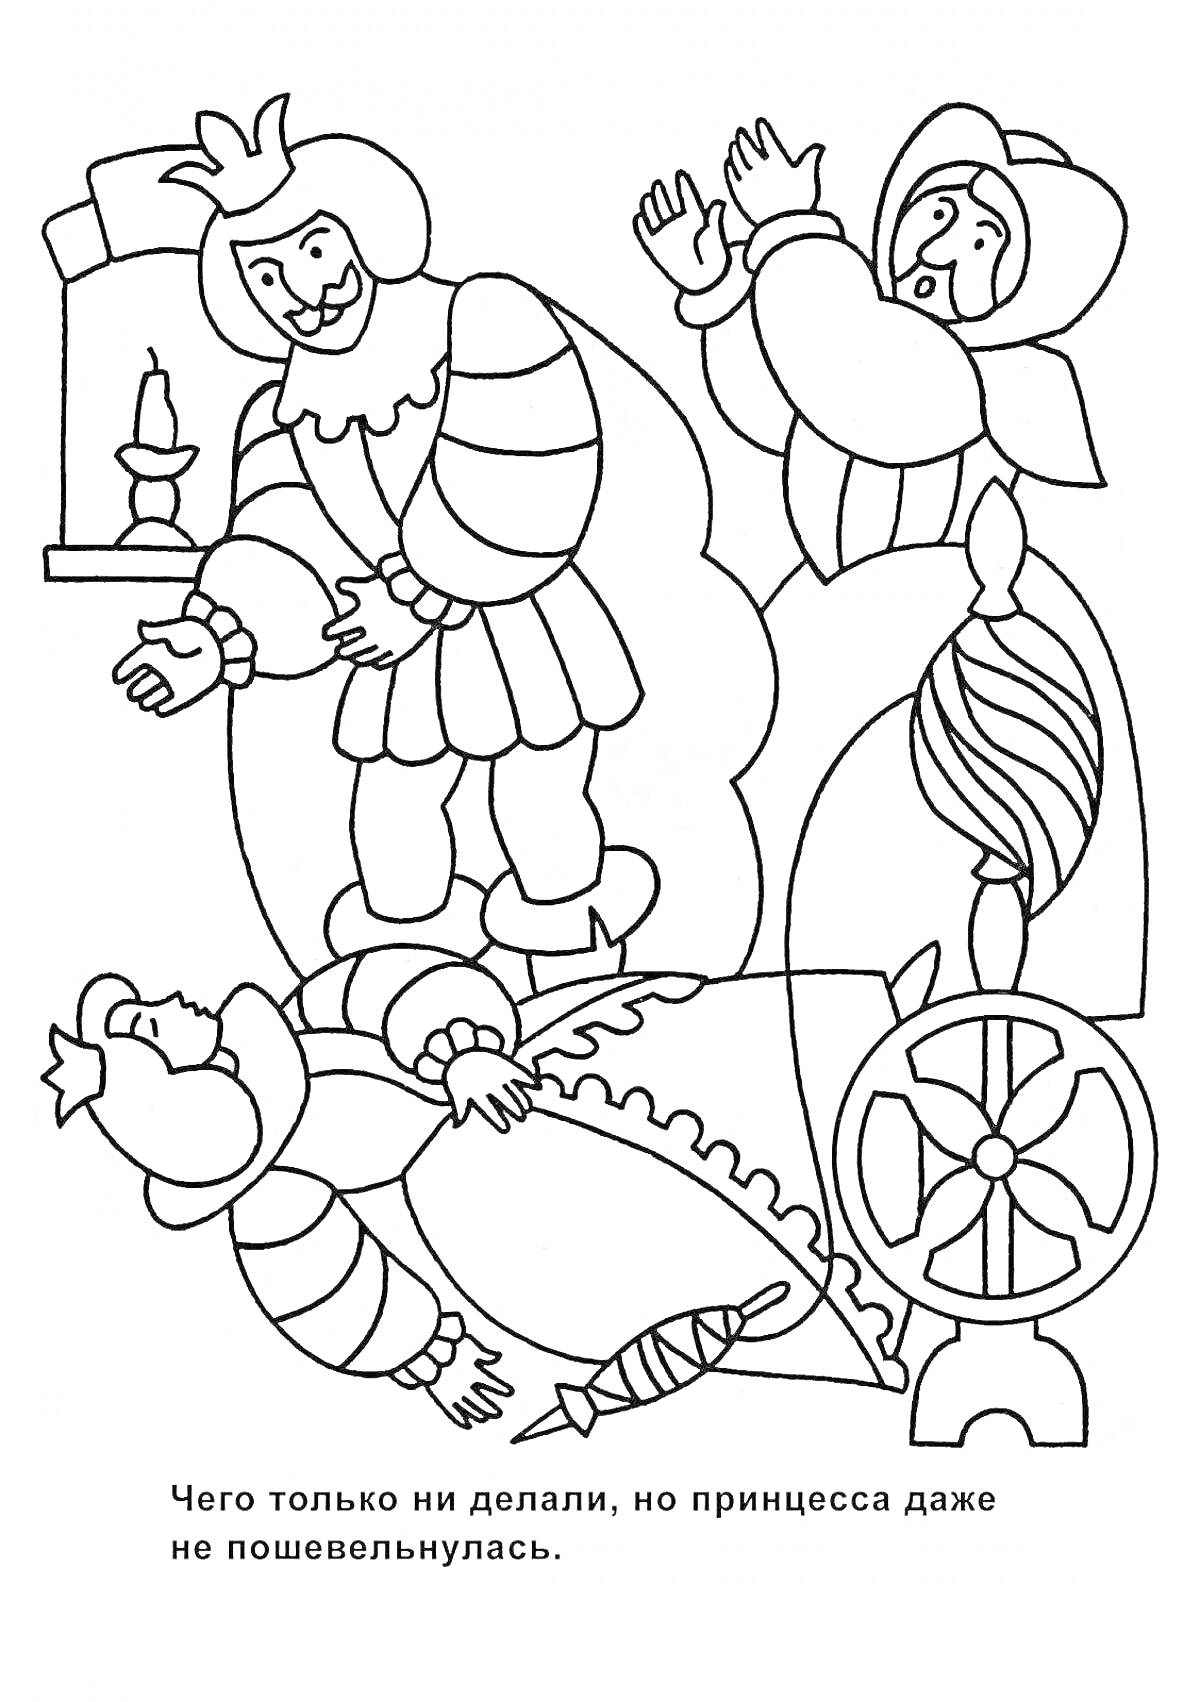 На раскраске изображено: Шарль Перро, Принцесса, Король, Прялка, Мужчина в шляпе